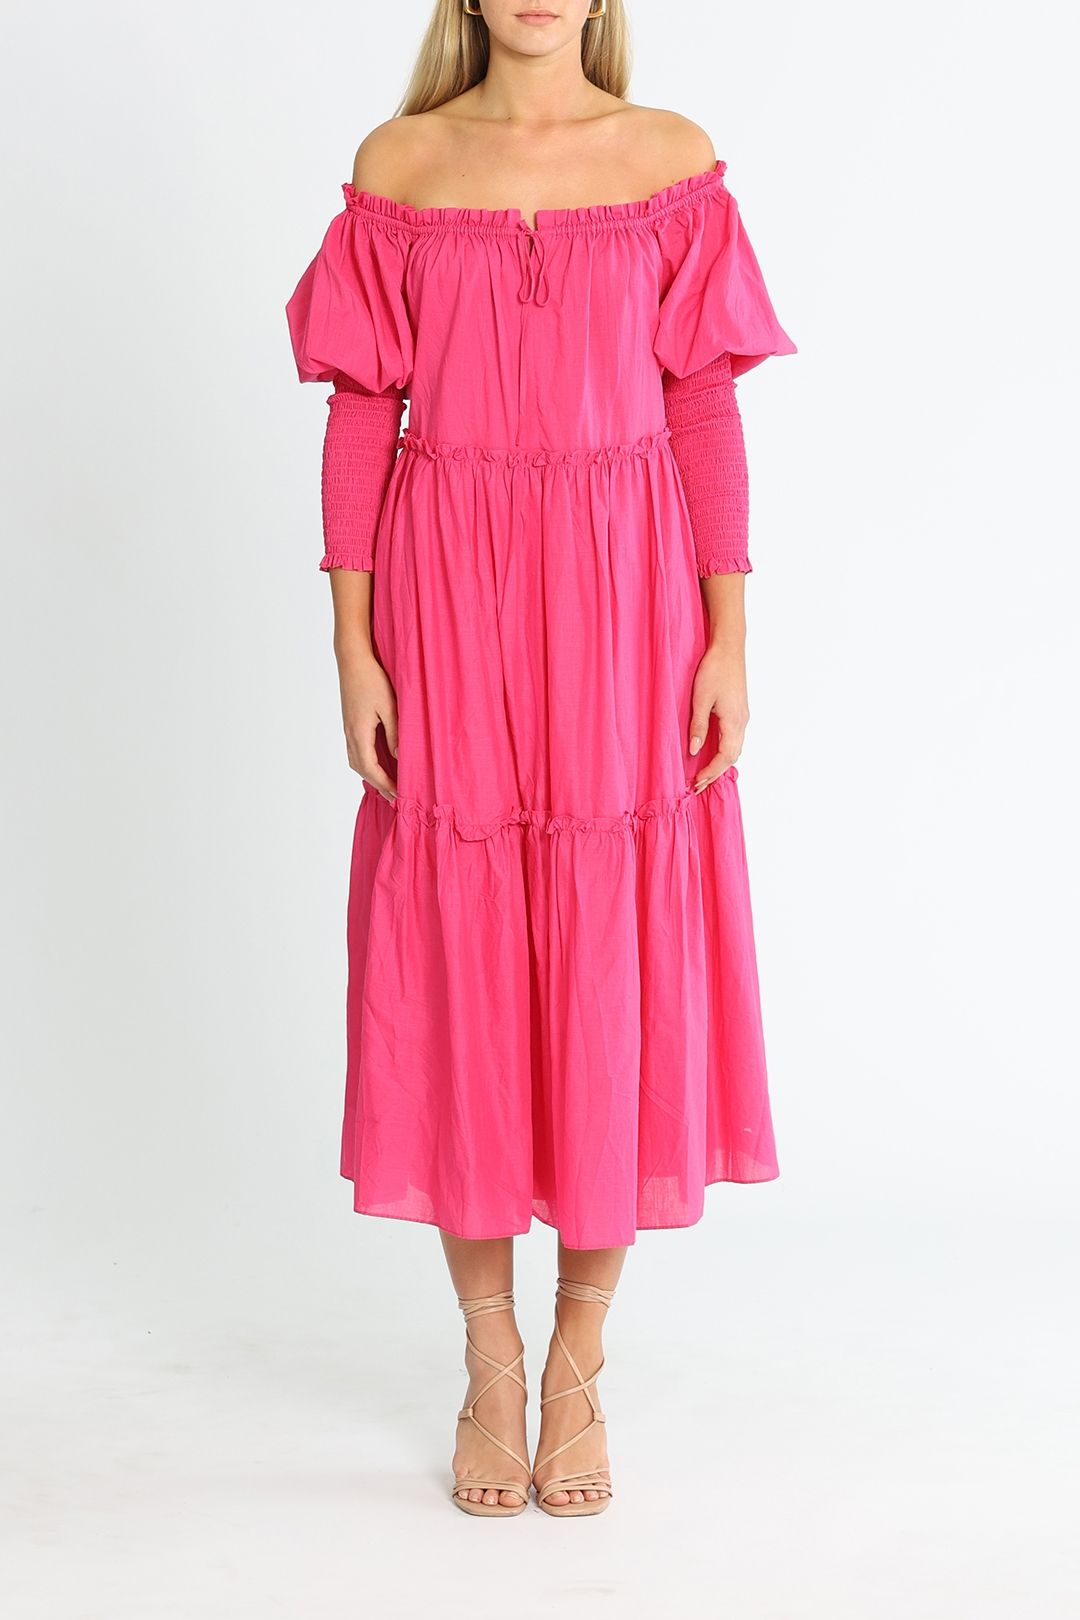 Steele Saffron Dress Pink